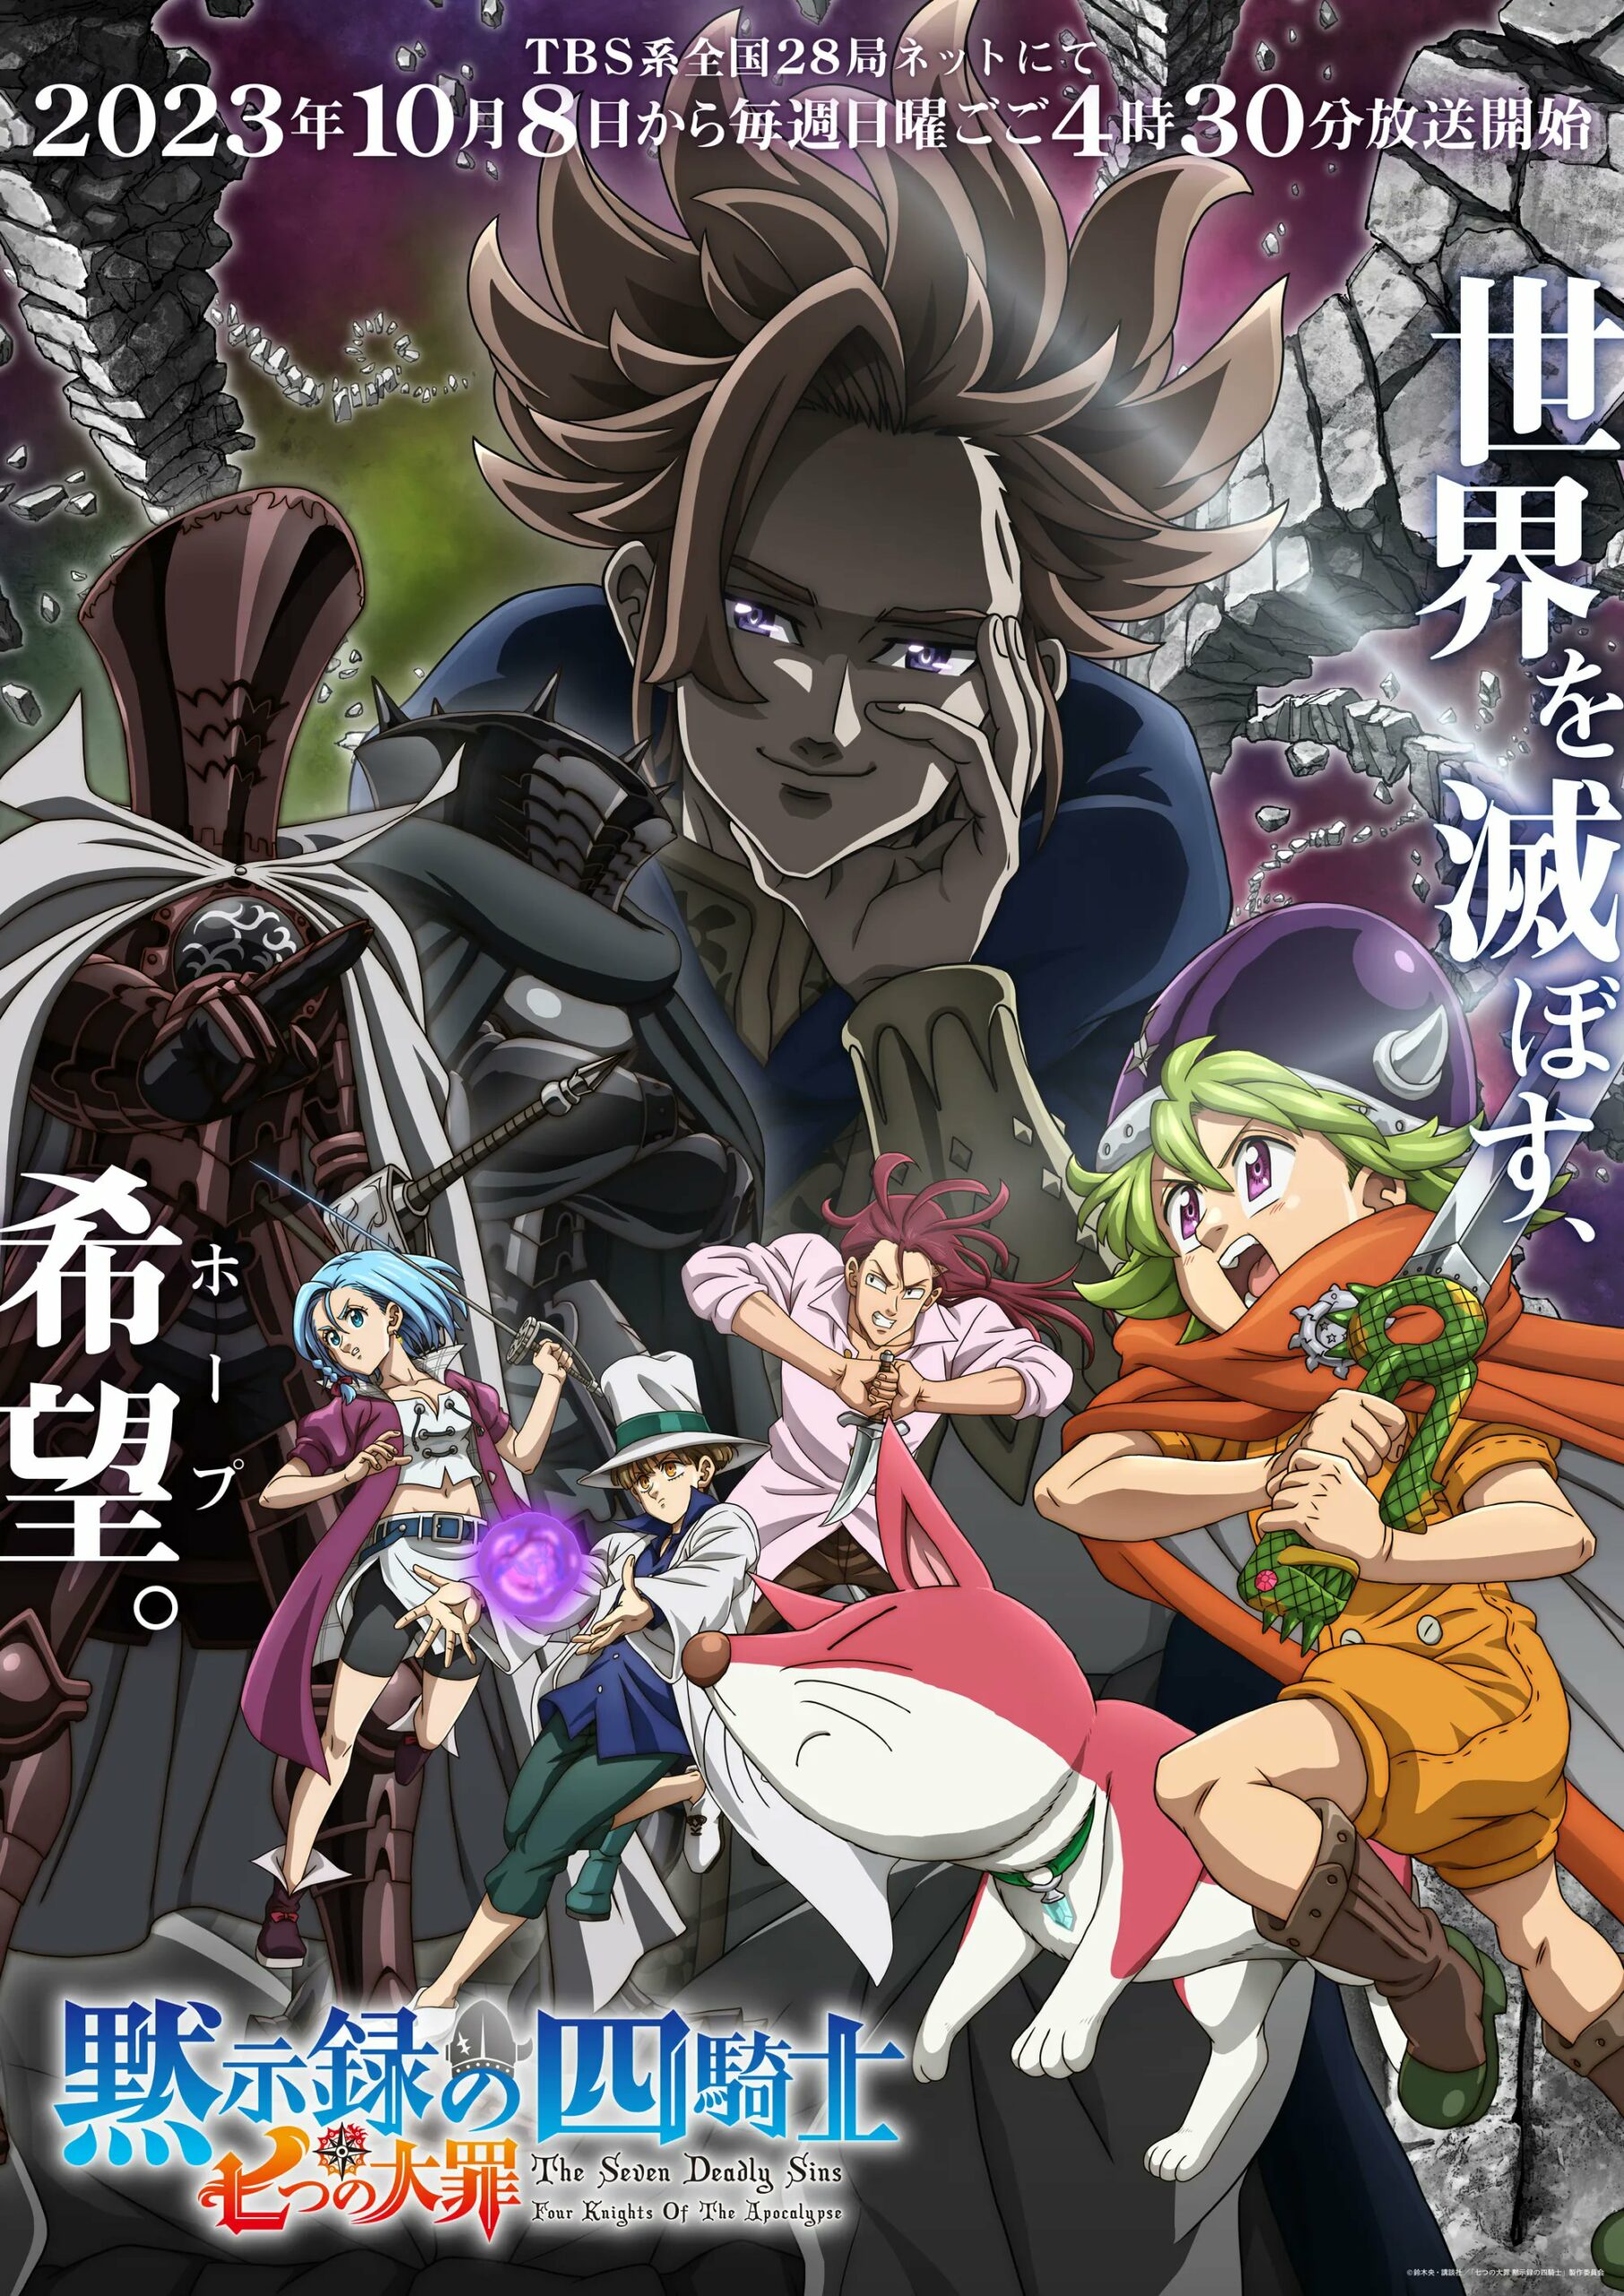 Os Sete Pecados Capitais: Os Quatro Cavaleiros do Apocalipse (Nanatsu no  Taizai: Mokushiroku no Yonkishi) Online - Assistir todos os episódios  completo